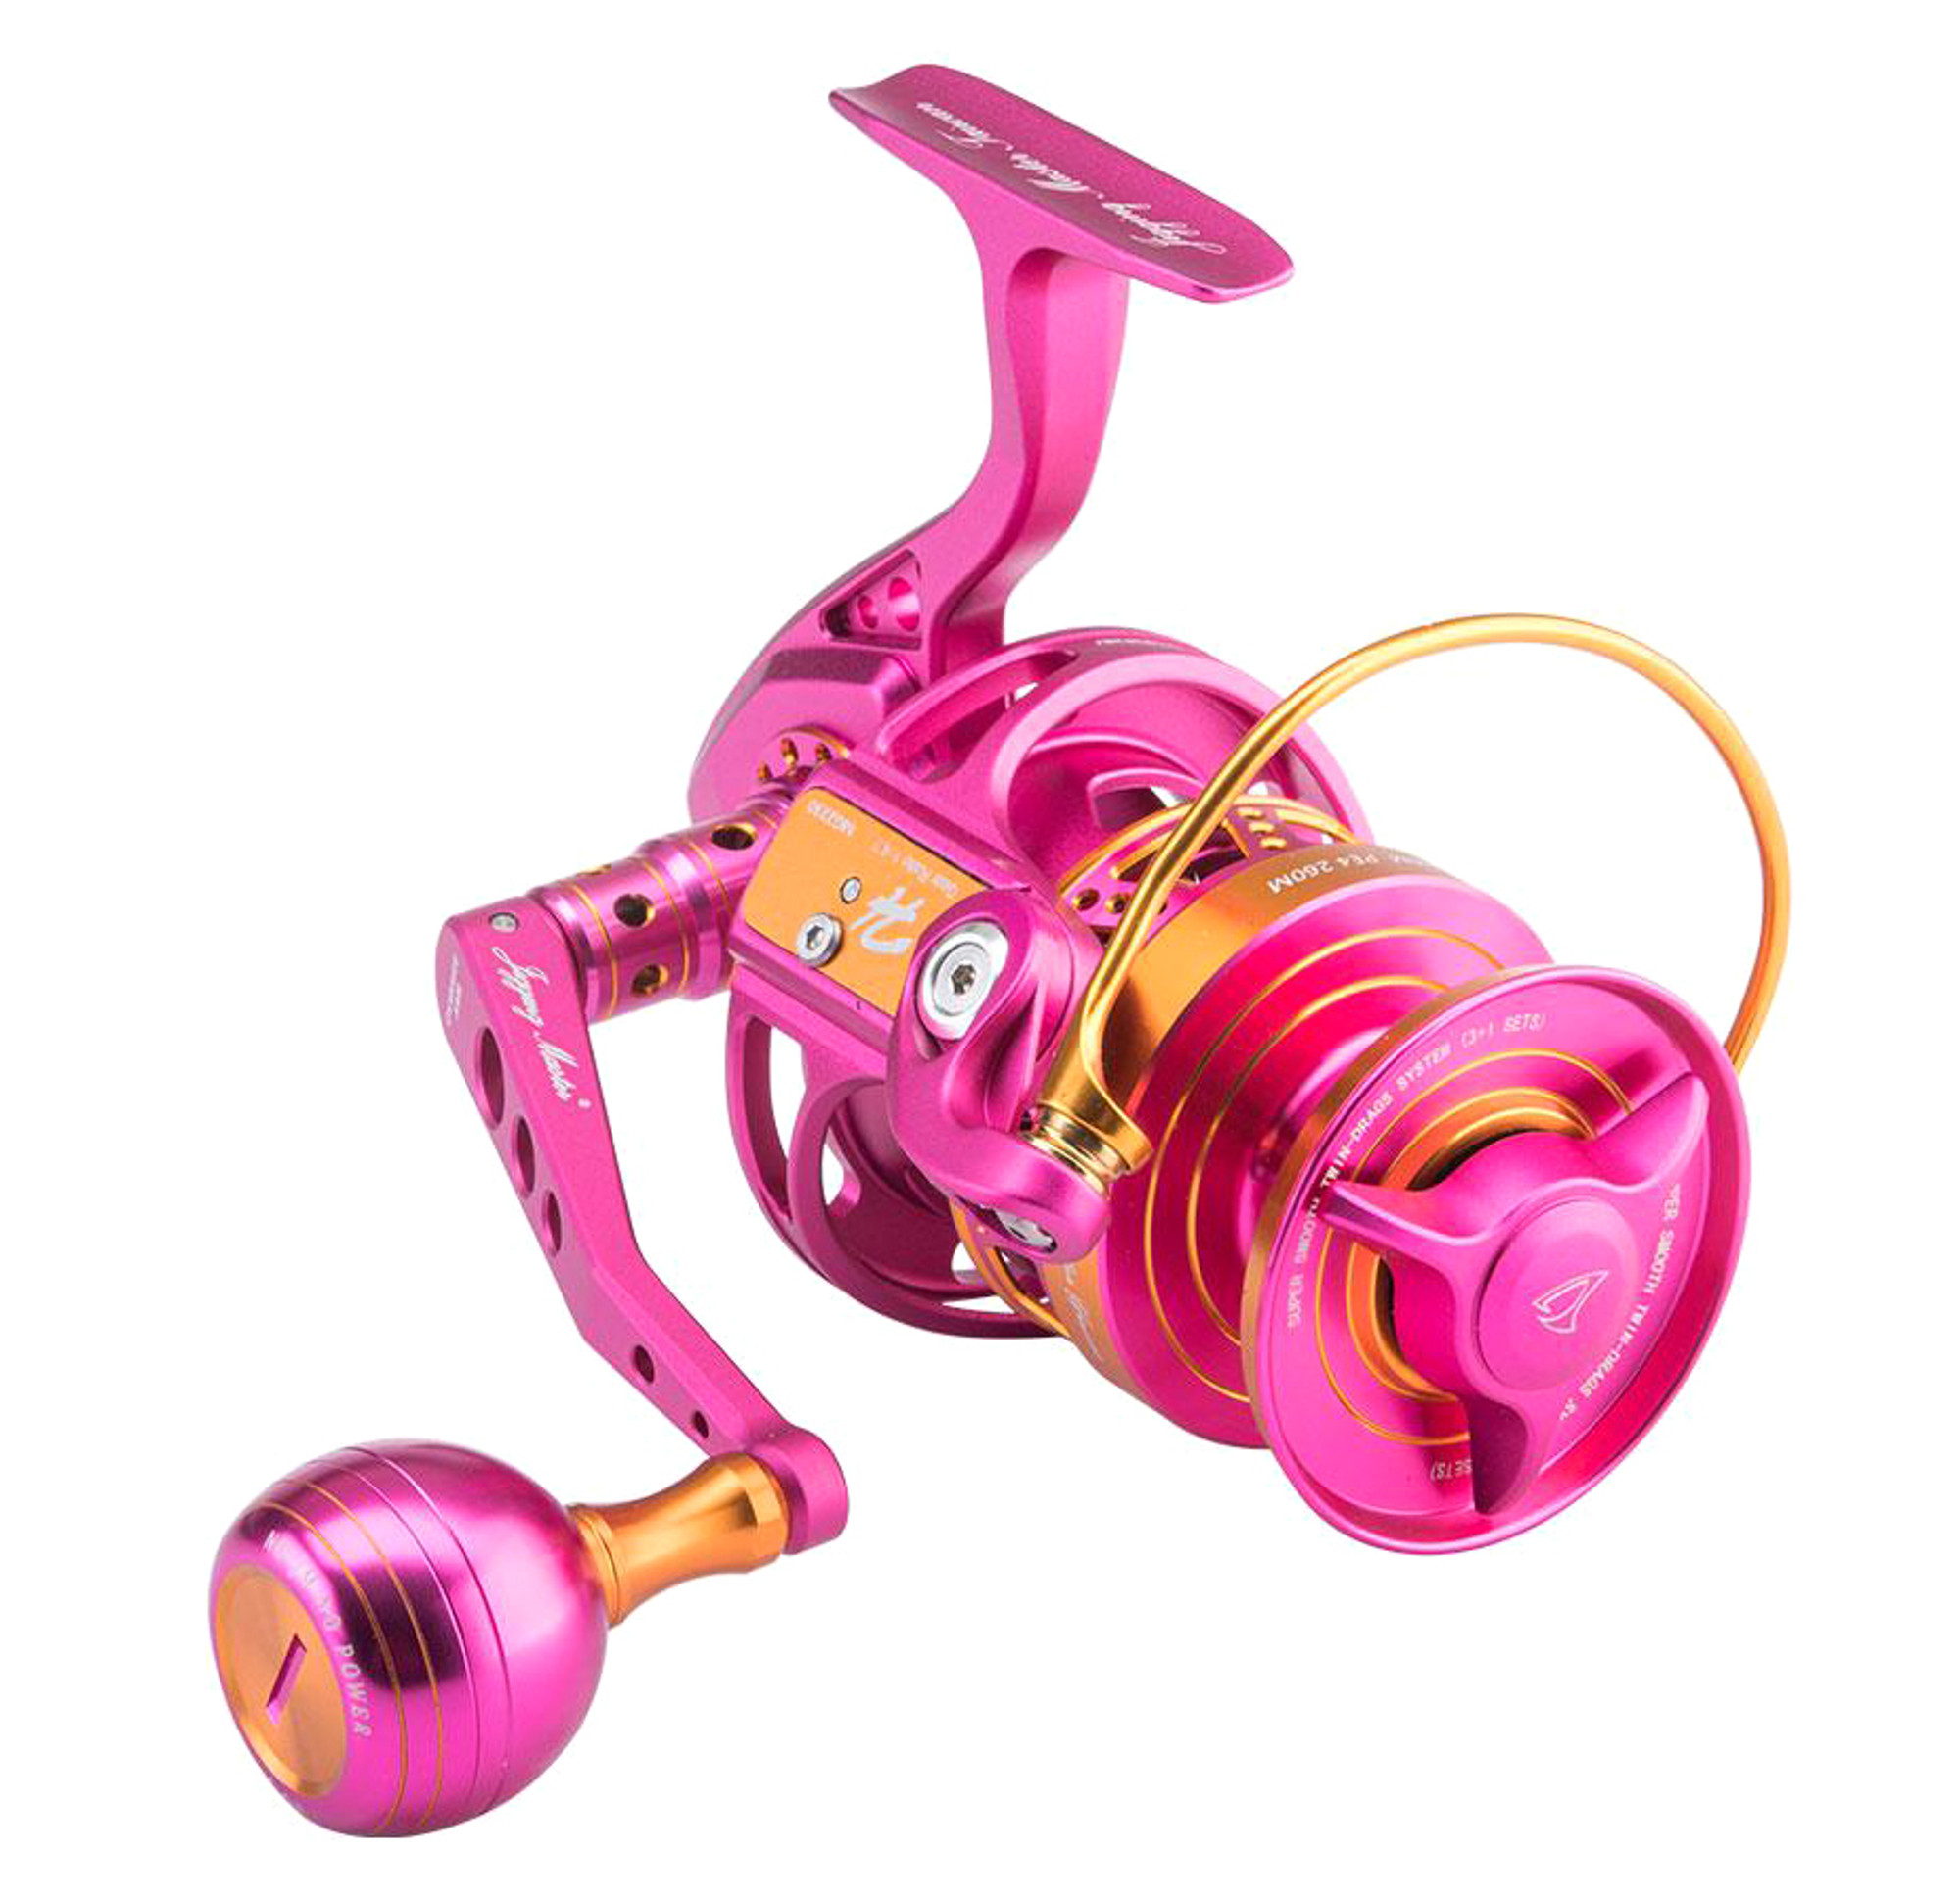 Jigging Master Monster Game Spinning Fishing Reel (Color: Pink & Gold)